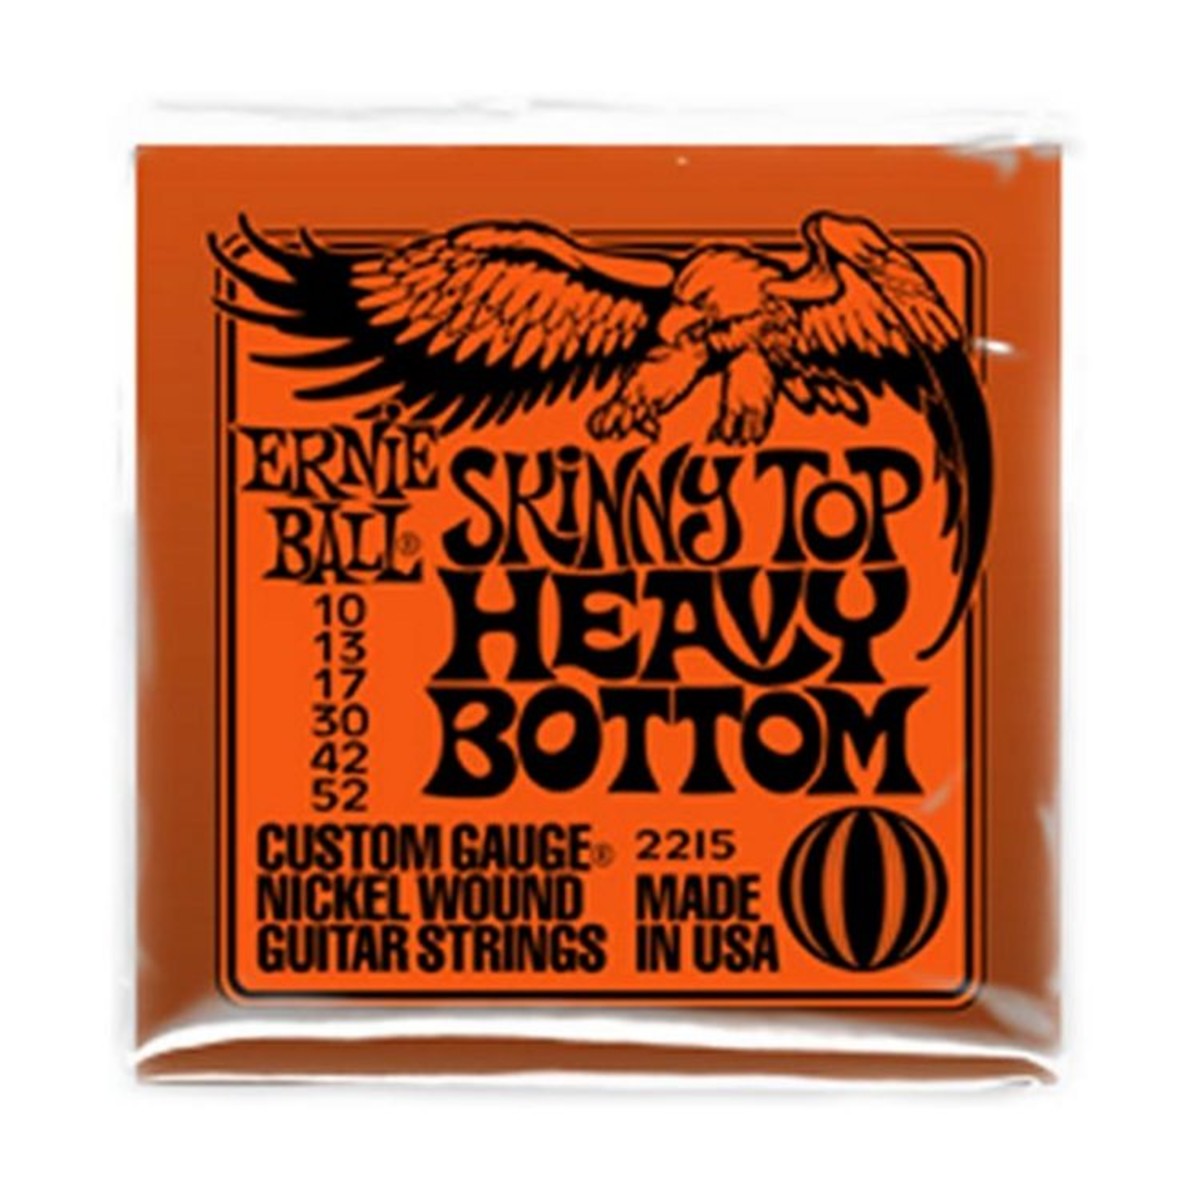 Ernie Ball Skinny Top Heavy Bottom Strings 10 - 52